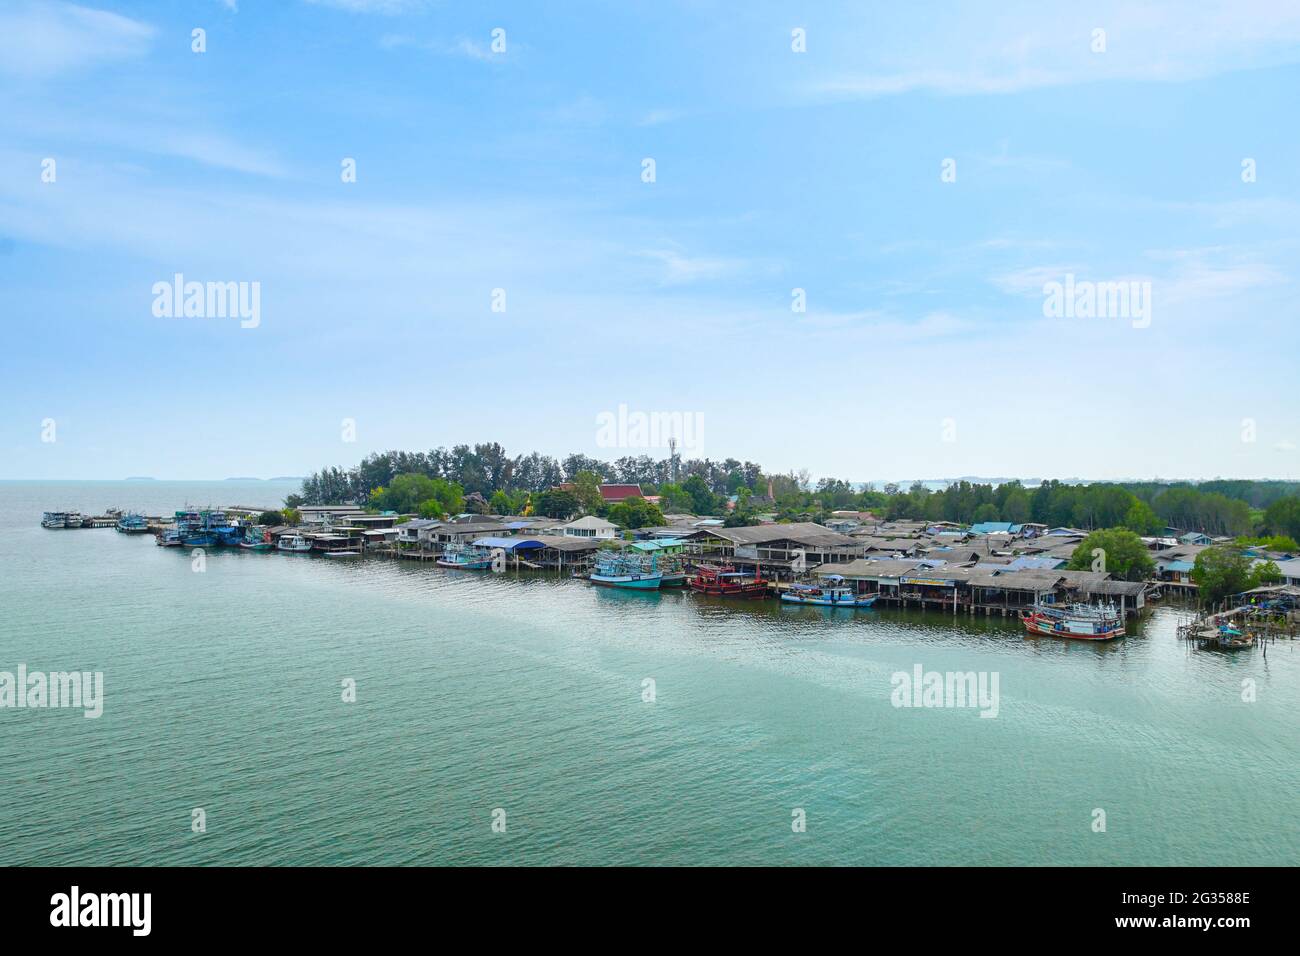 Scenery from Prasae Sin Bridge Viewpoint in Chanthaburi province, Thailand. Stock Photo